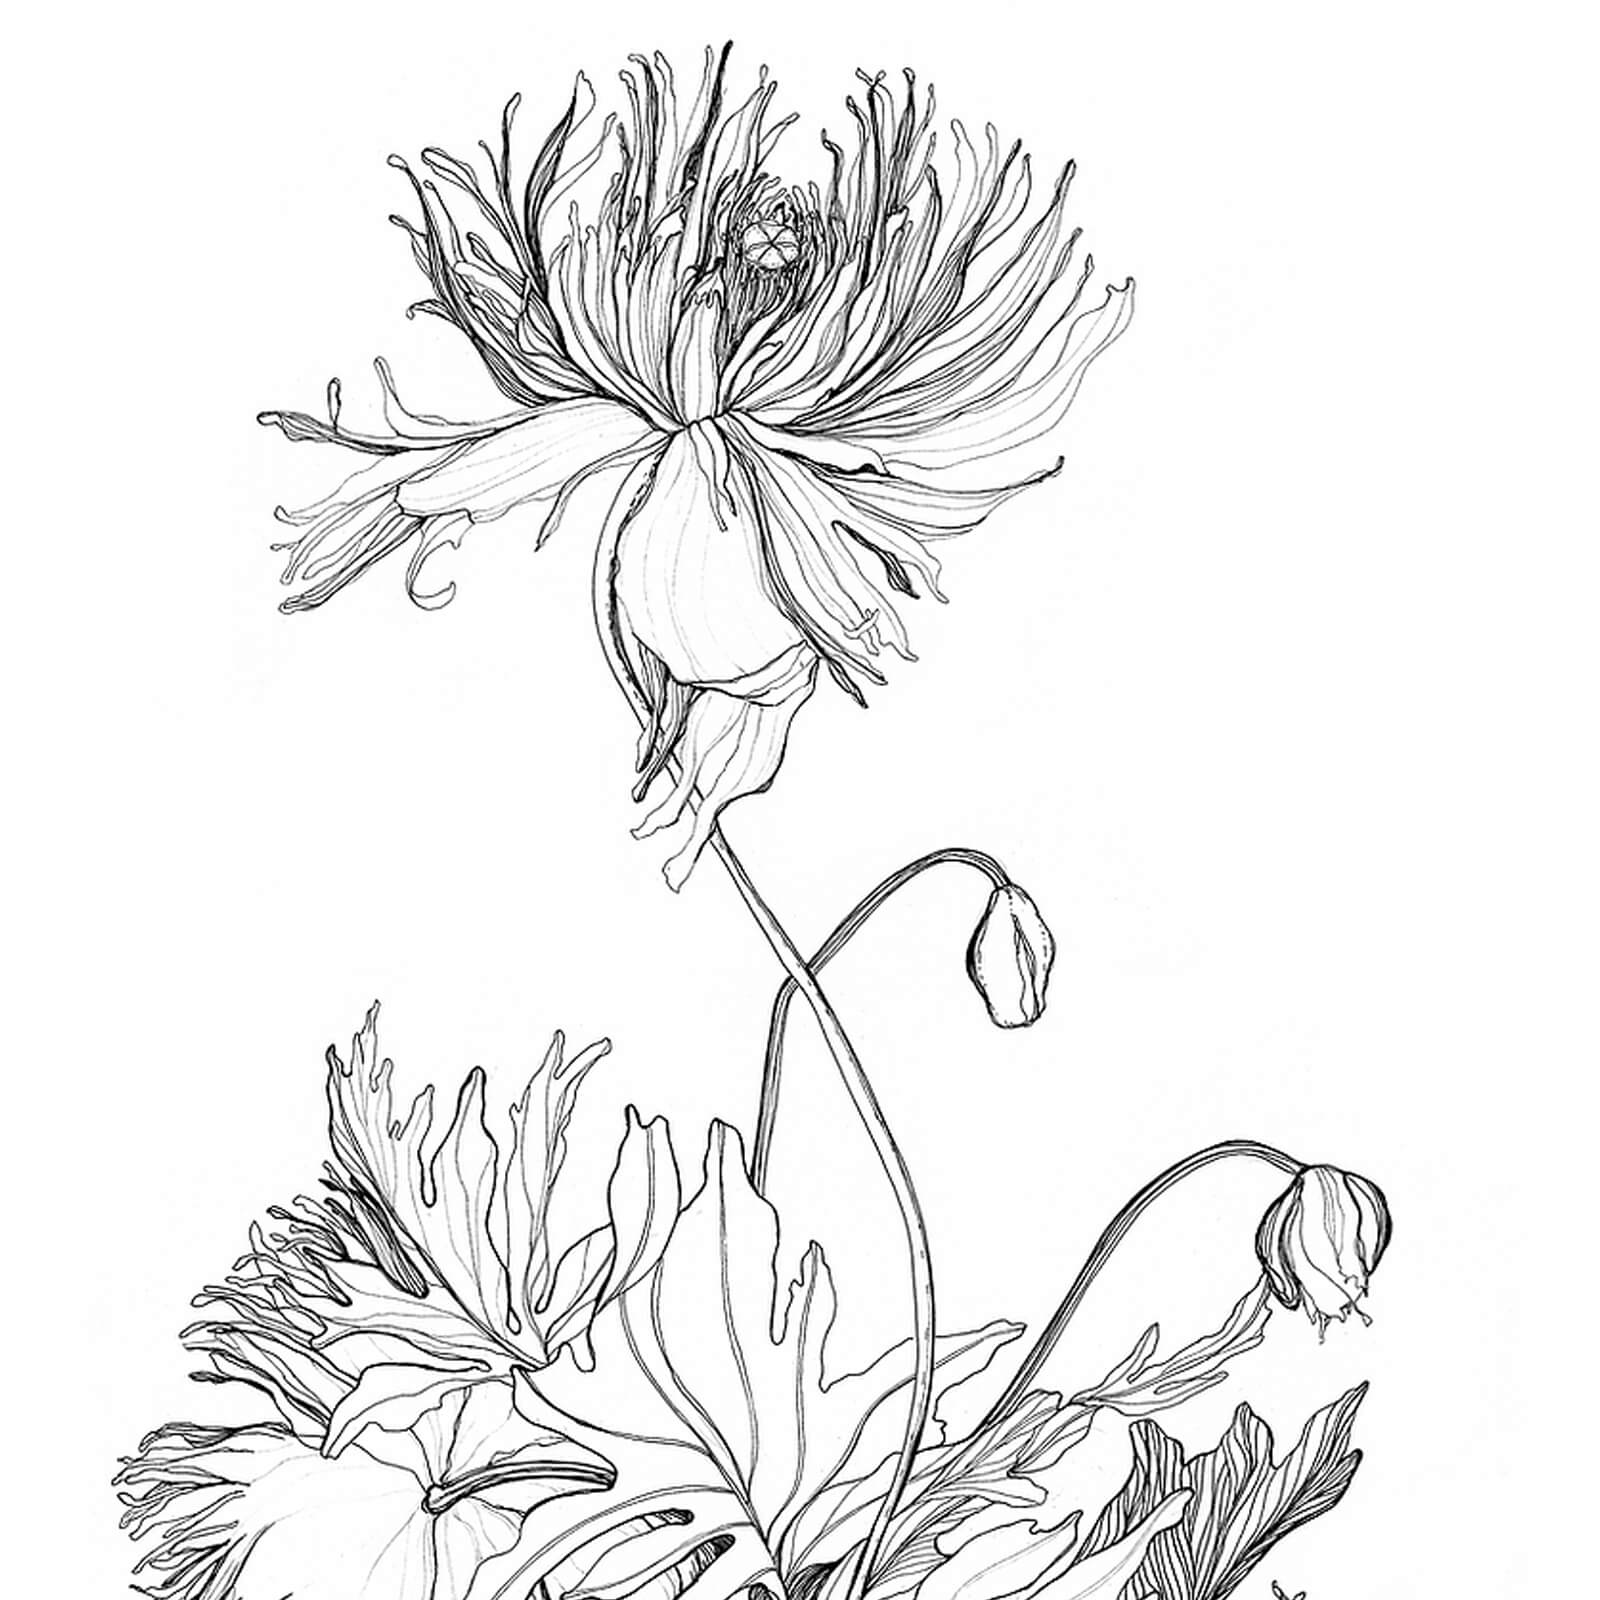 Hand Drawn Botanical Illustration Print - Japanese Poppies - 11x14